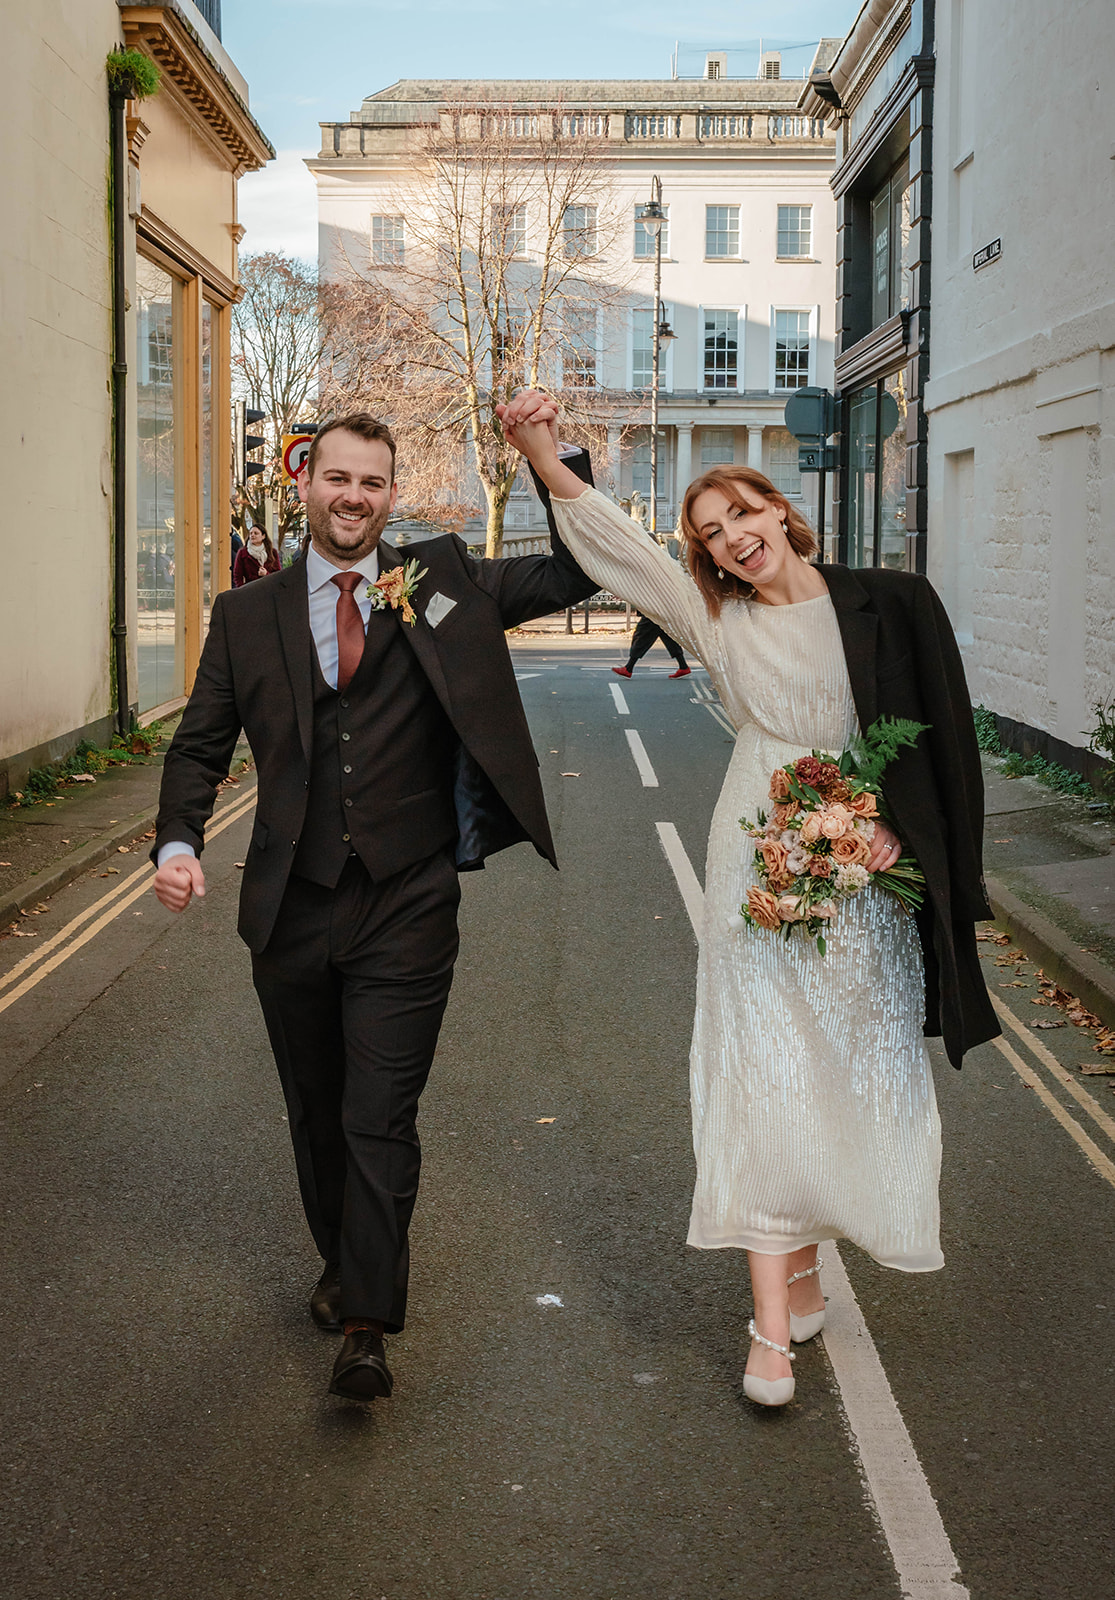 Zara Davis Wedding Photography Cotswolds Gloucestershire Cheltenham walking down the street bride and groom 